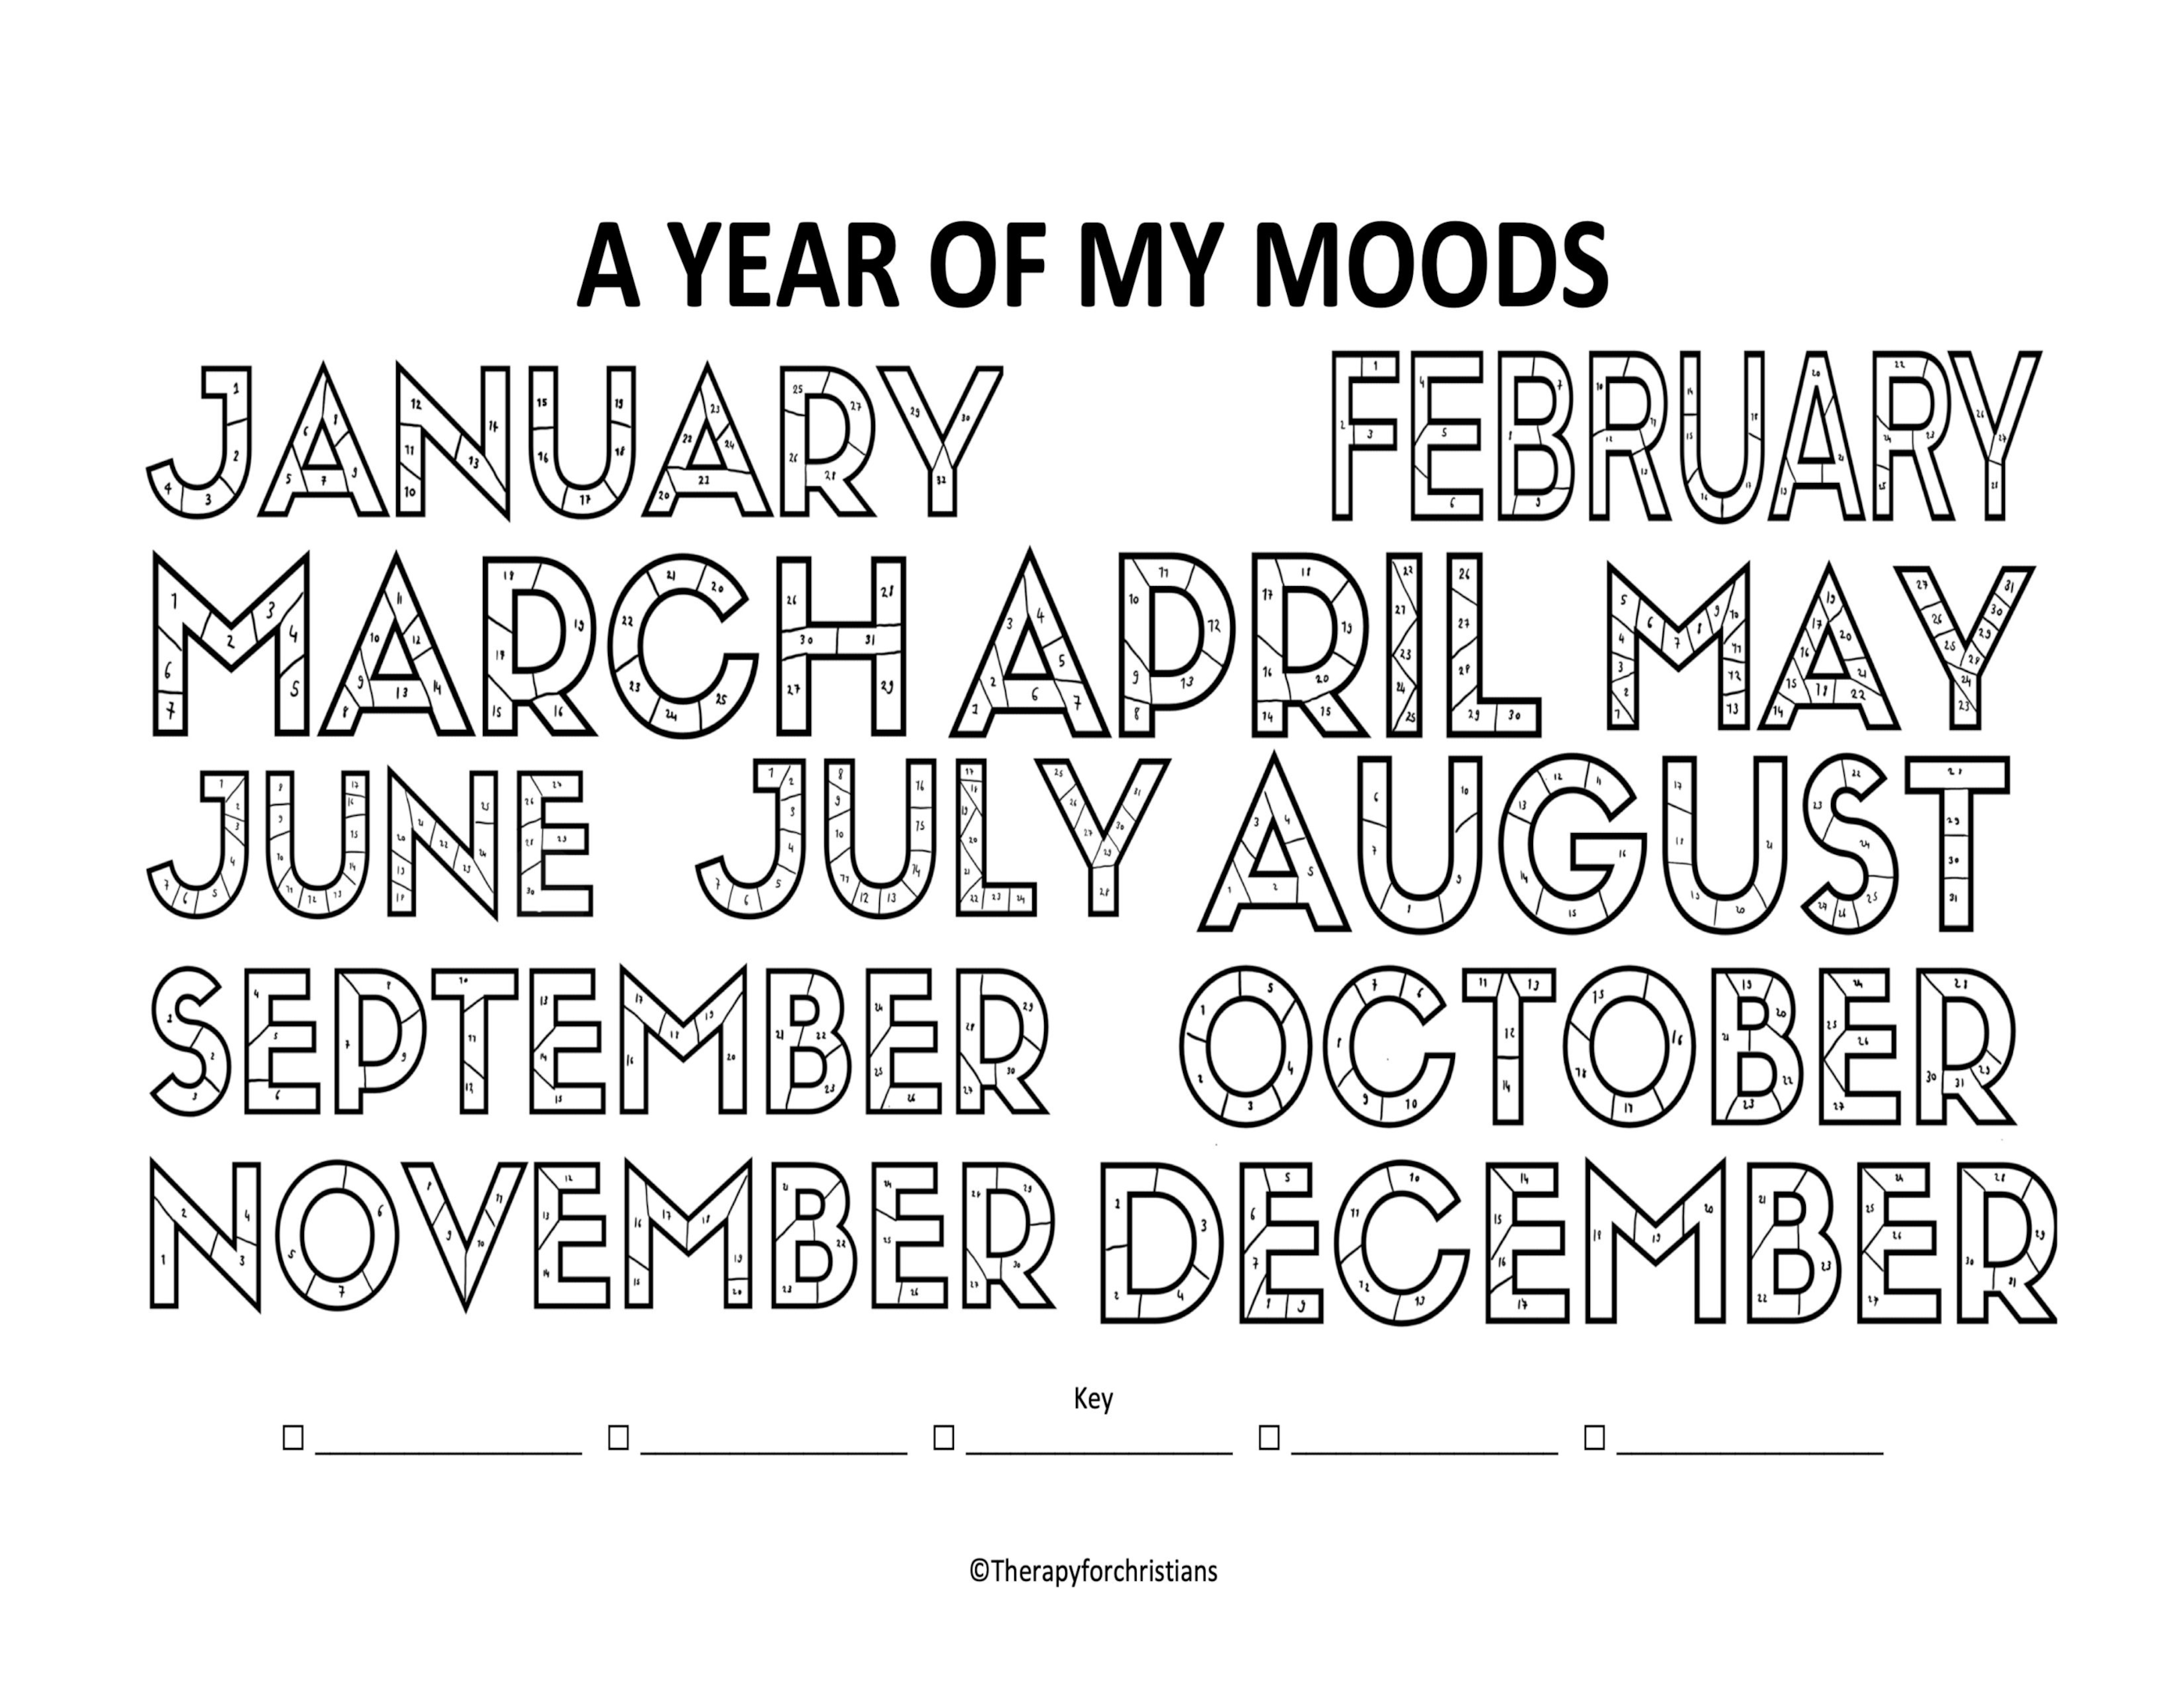 Yearly mood tracker 